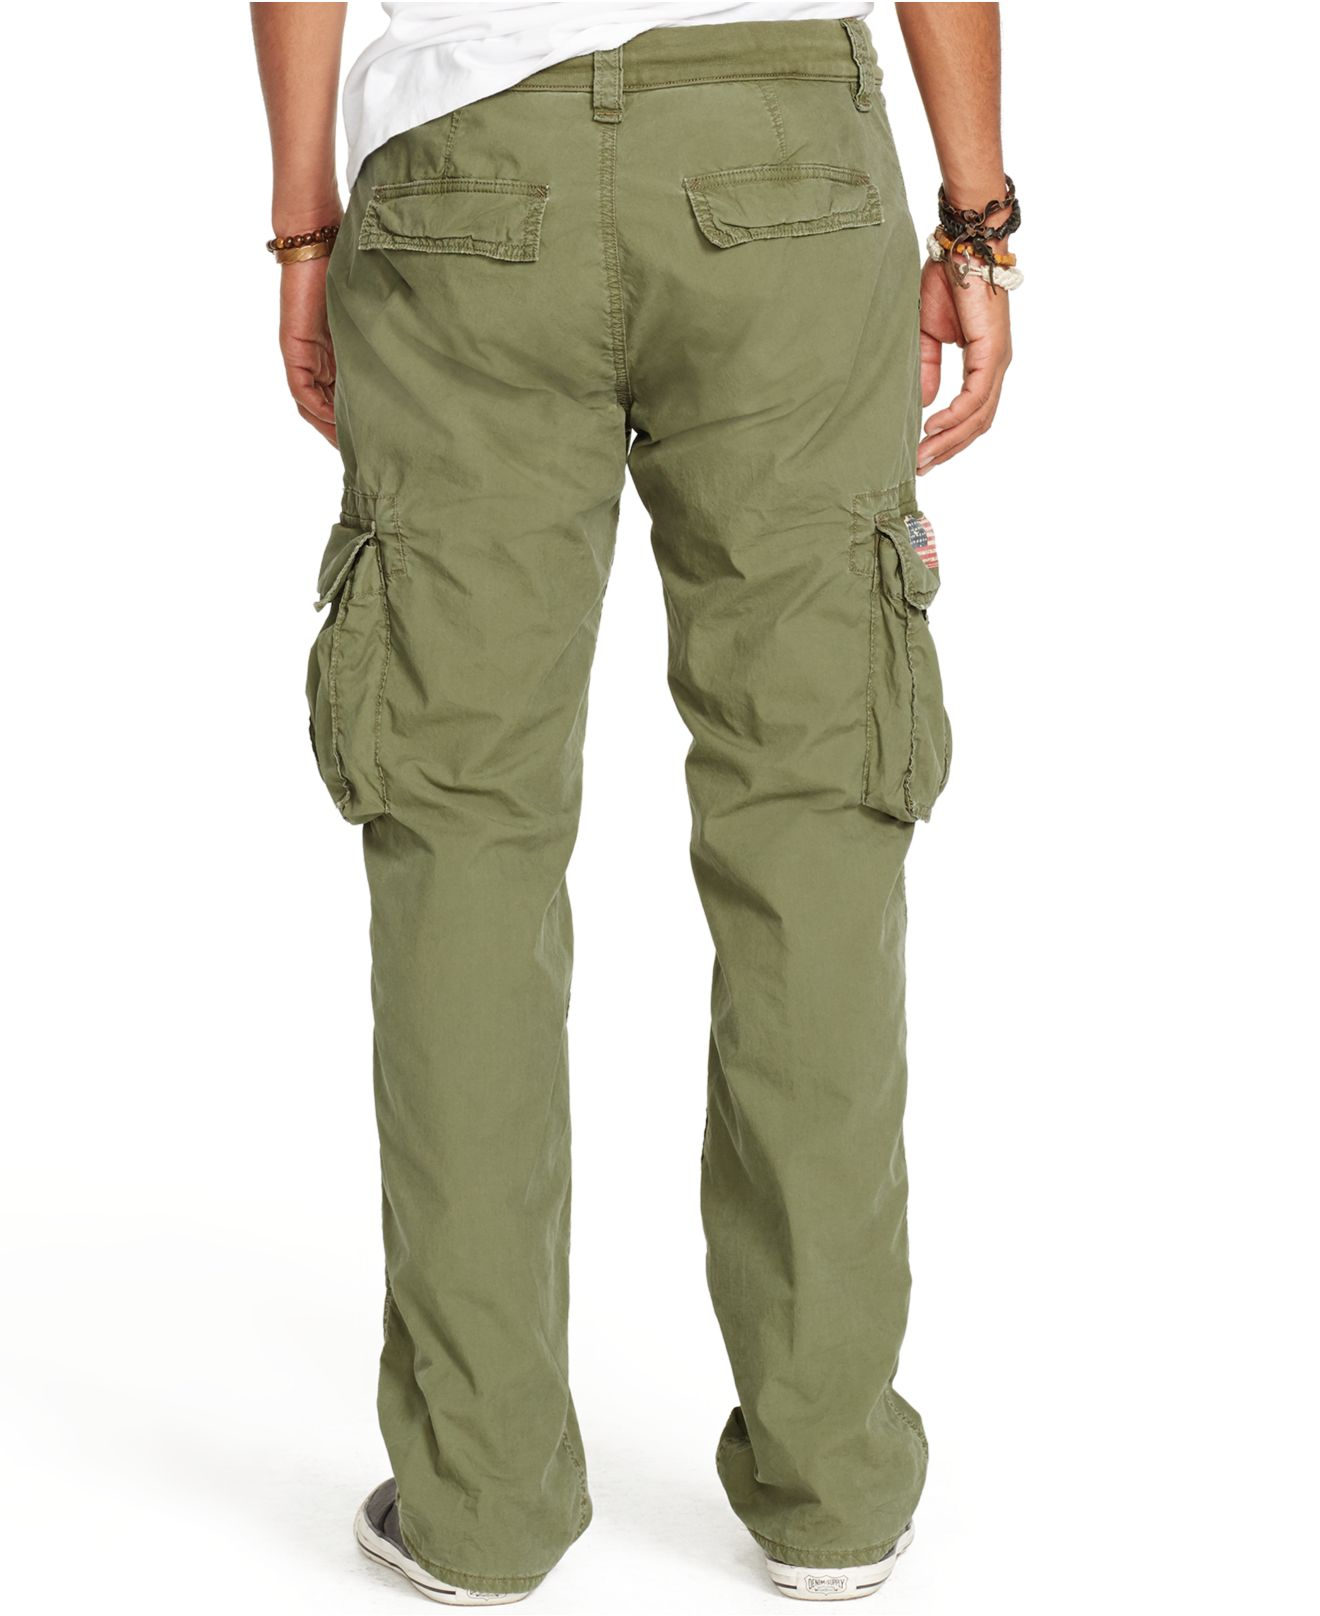 Denim & Supply Ralph Lauren Jersey-Lined Cargo Pant in Green for Men - Lyst